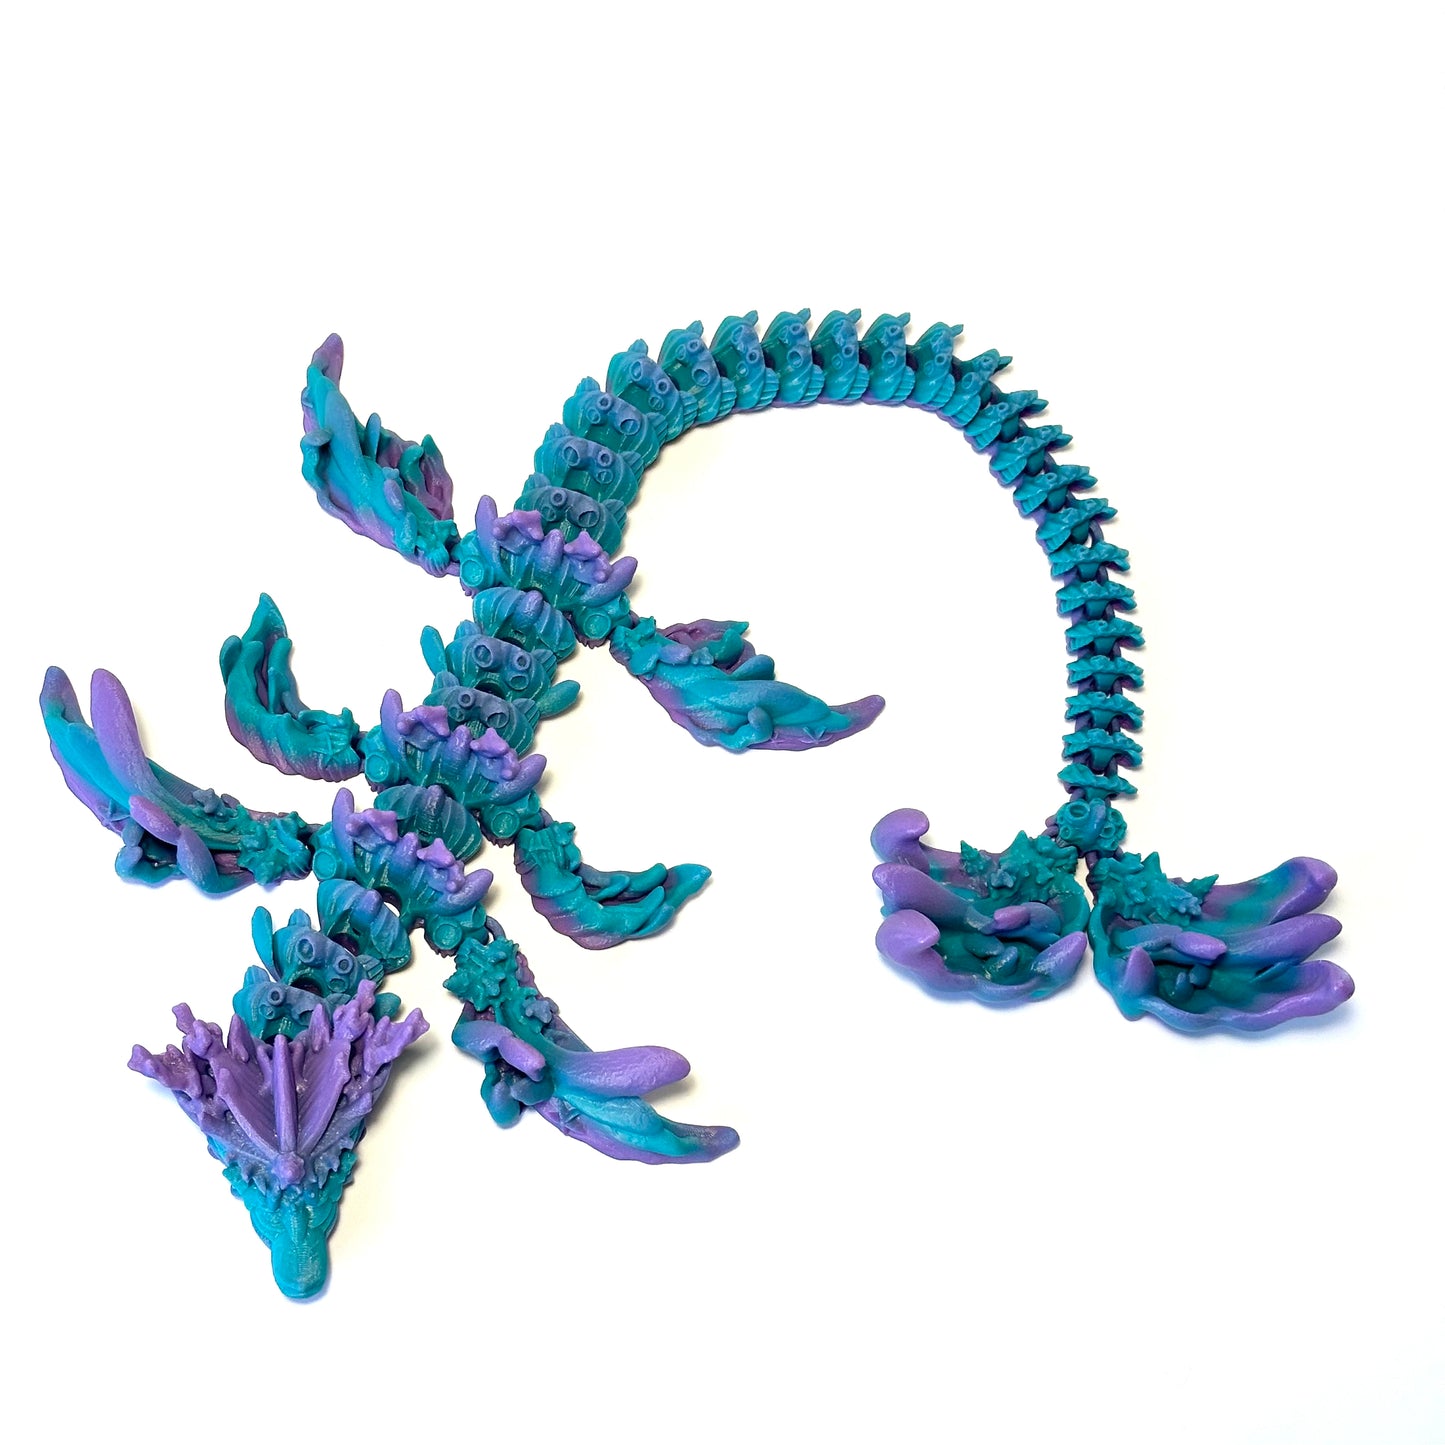 Coral Reef Dragon - 3D Printed Articulating